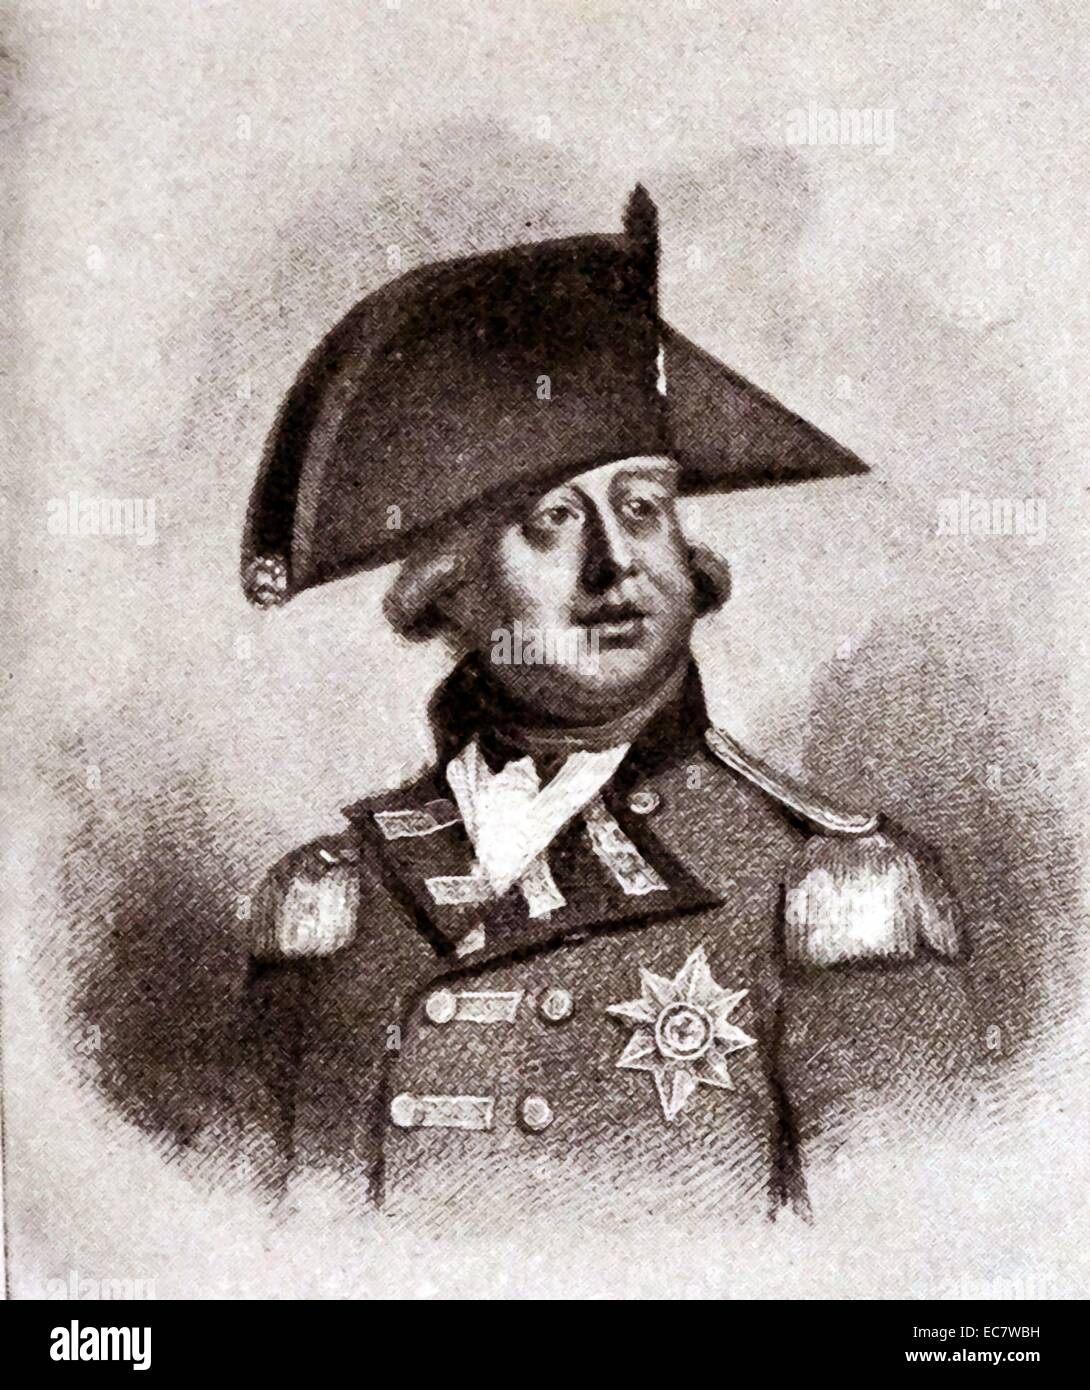 Le roi George III de Grande-bretagne 1800 Banque D'Images